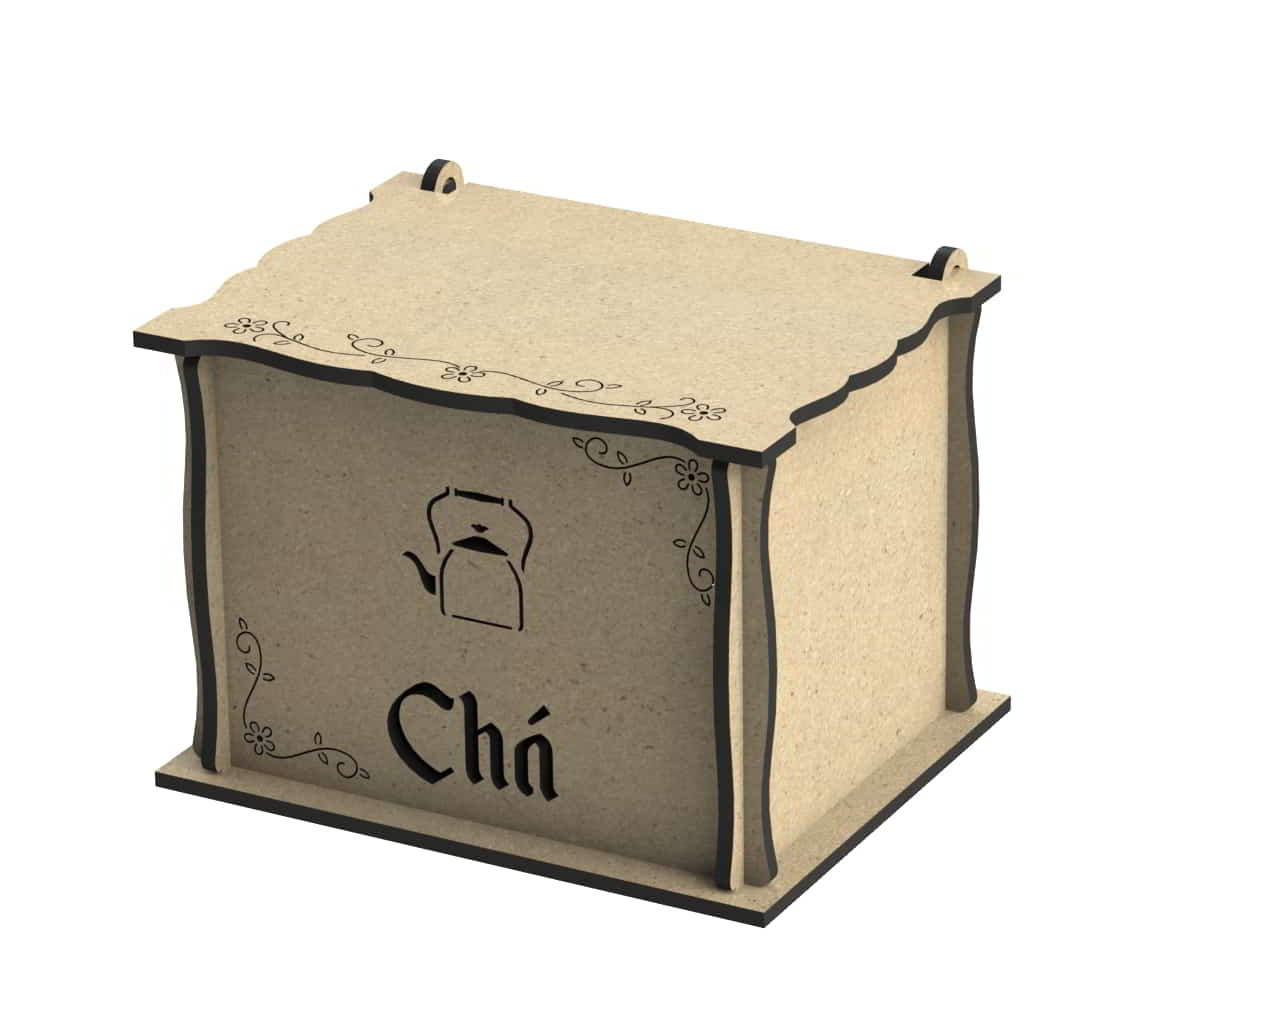 Laser Cut Wooden Tea Box, Plywood Organizer Box Vector File